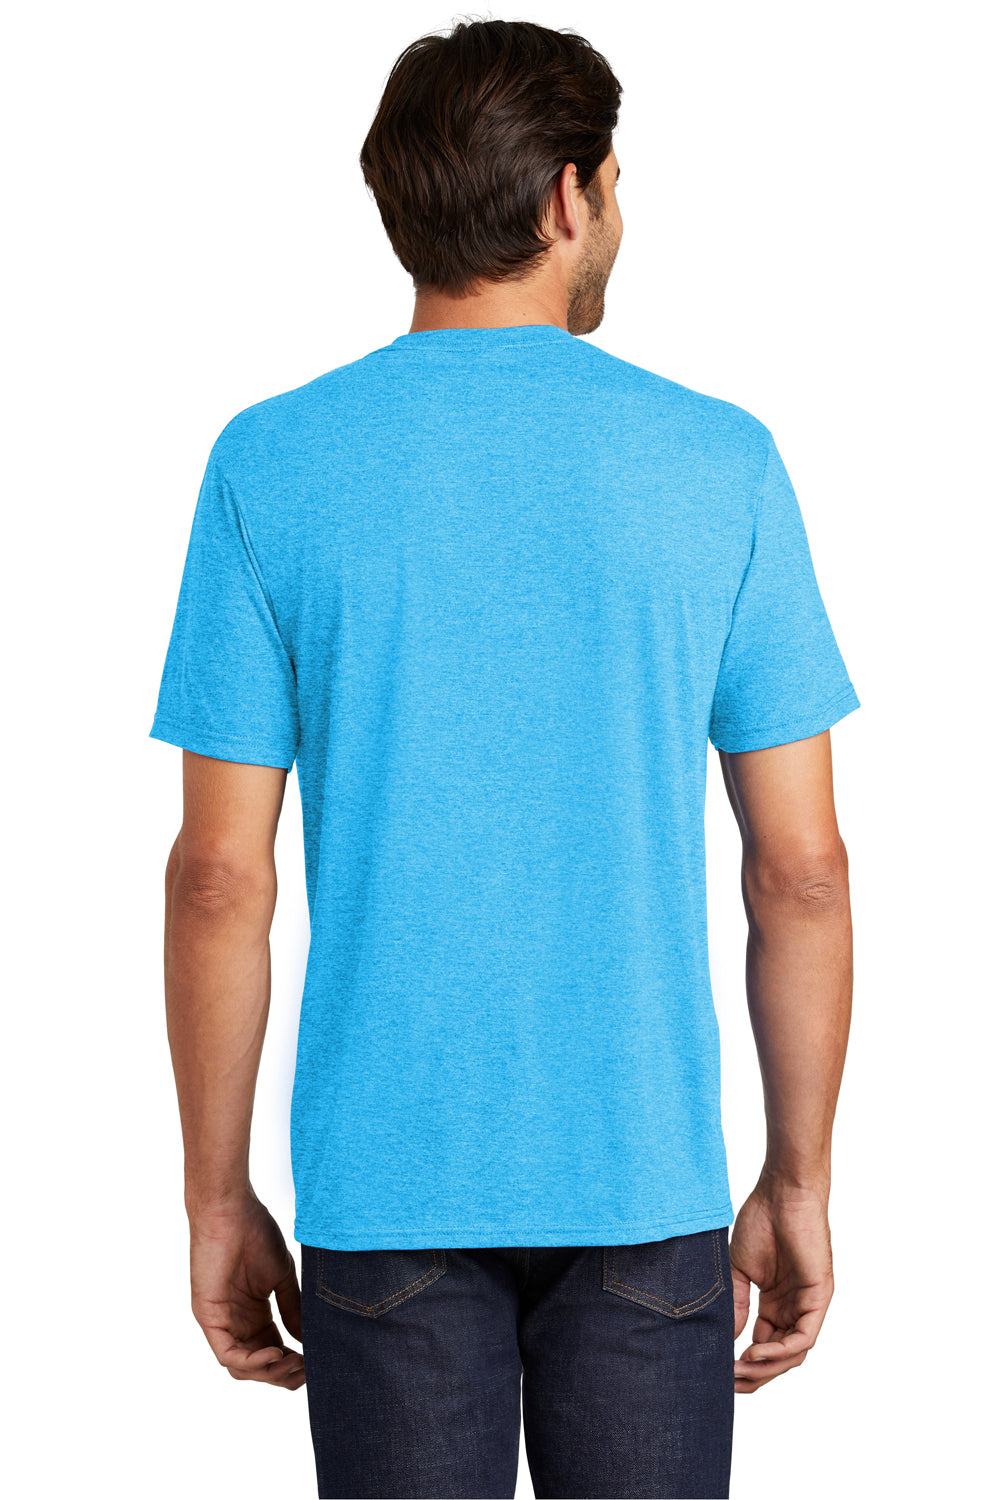 District DM130 Mens Perfect Tri Short Sleeve Crewneck T-Shirt Turquoise Blue Frost Back